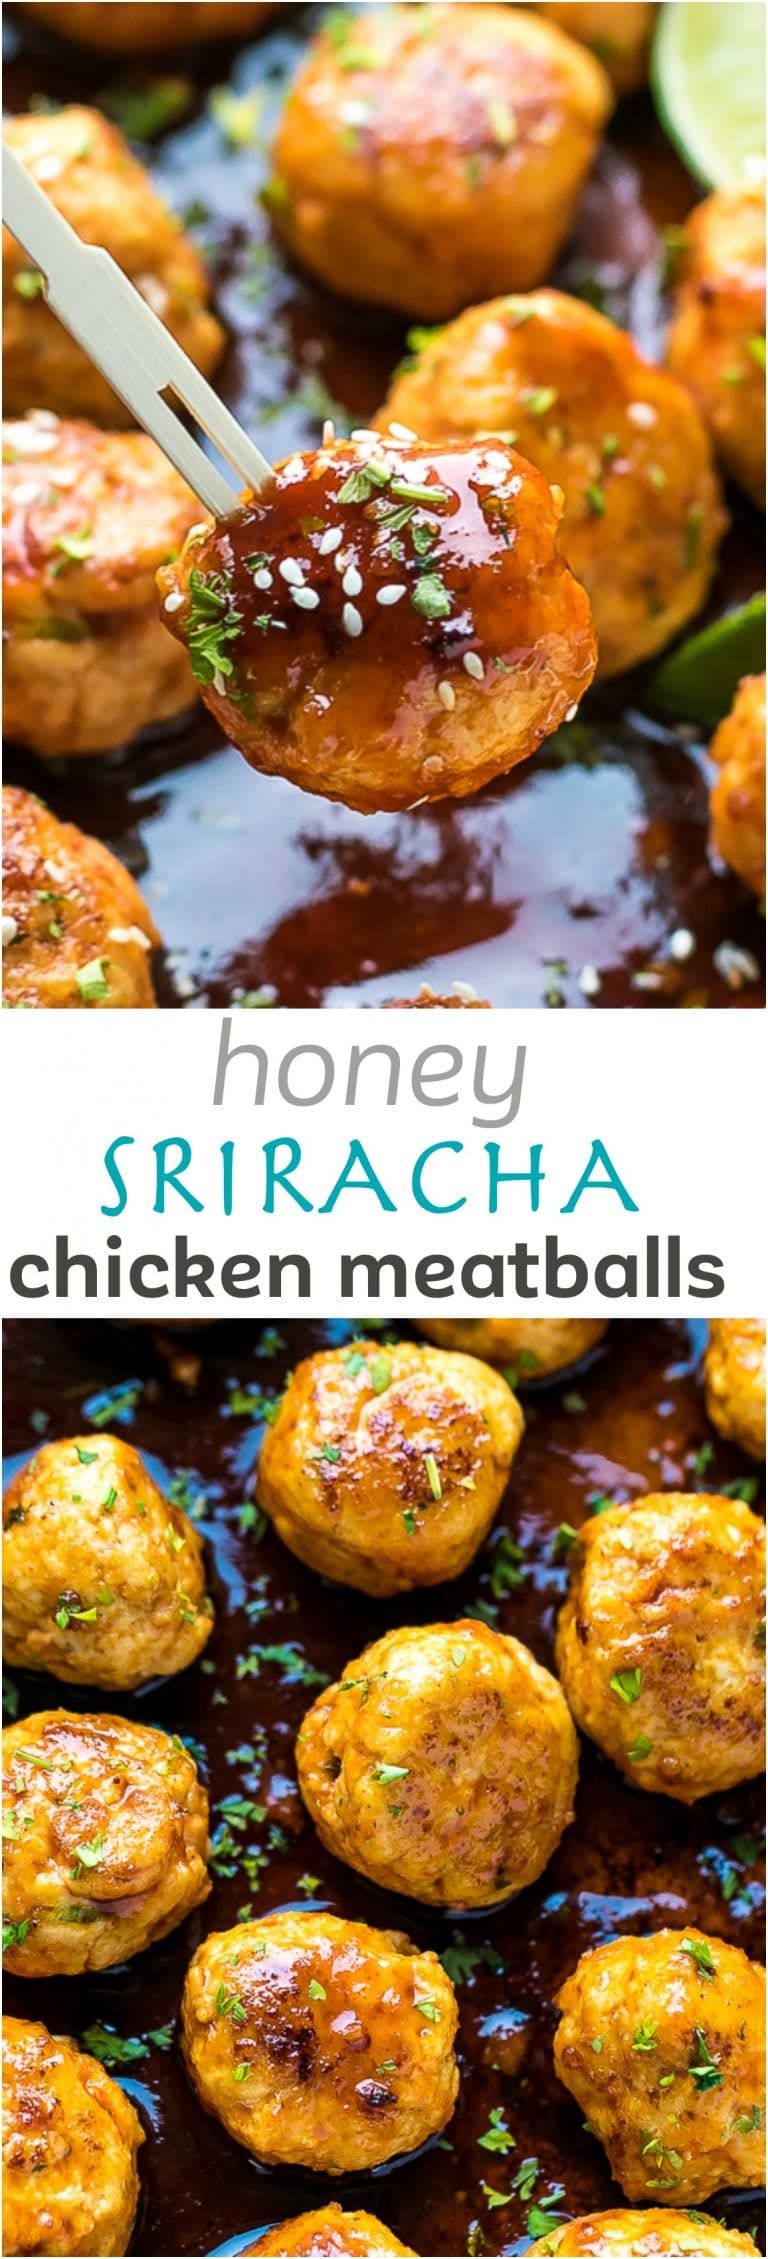 Honey Sriracha Chicken Meatballs Recipe - Cooking LSL